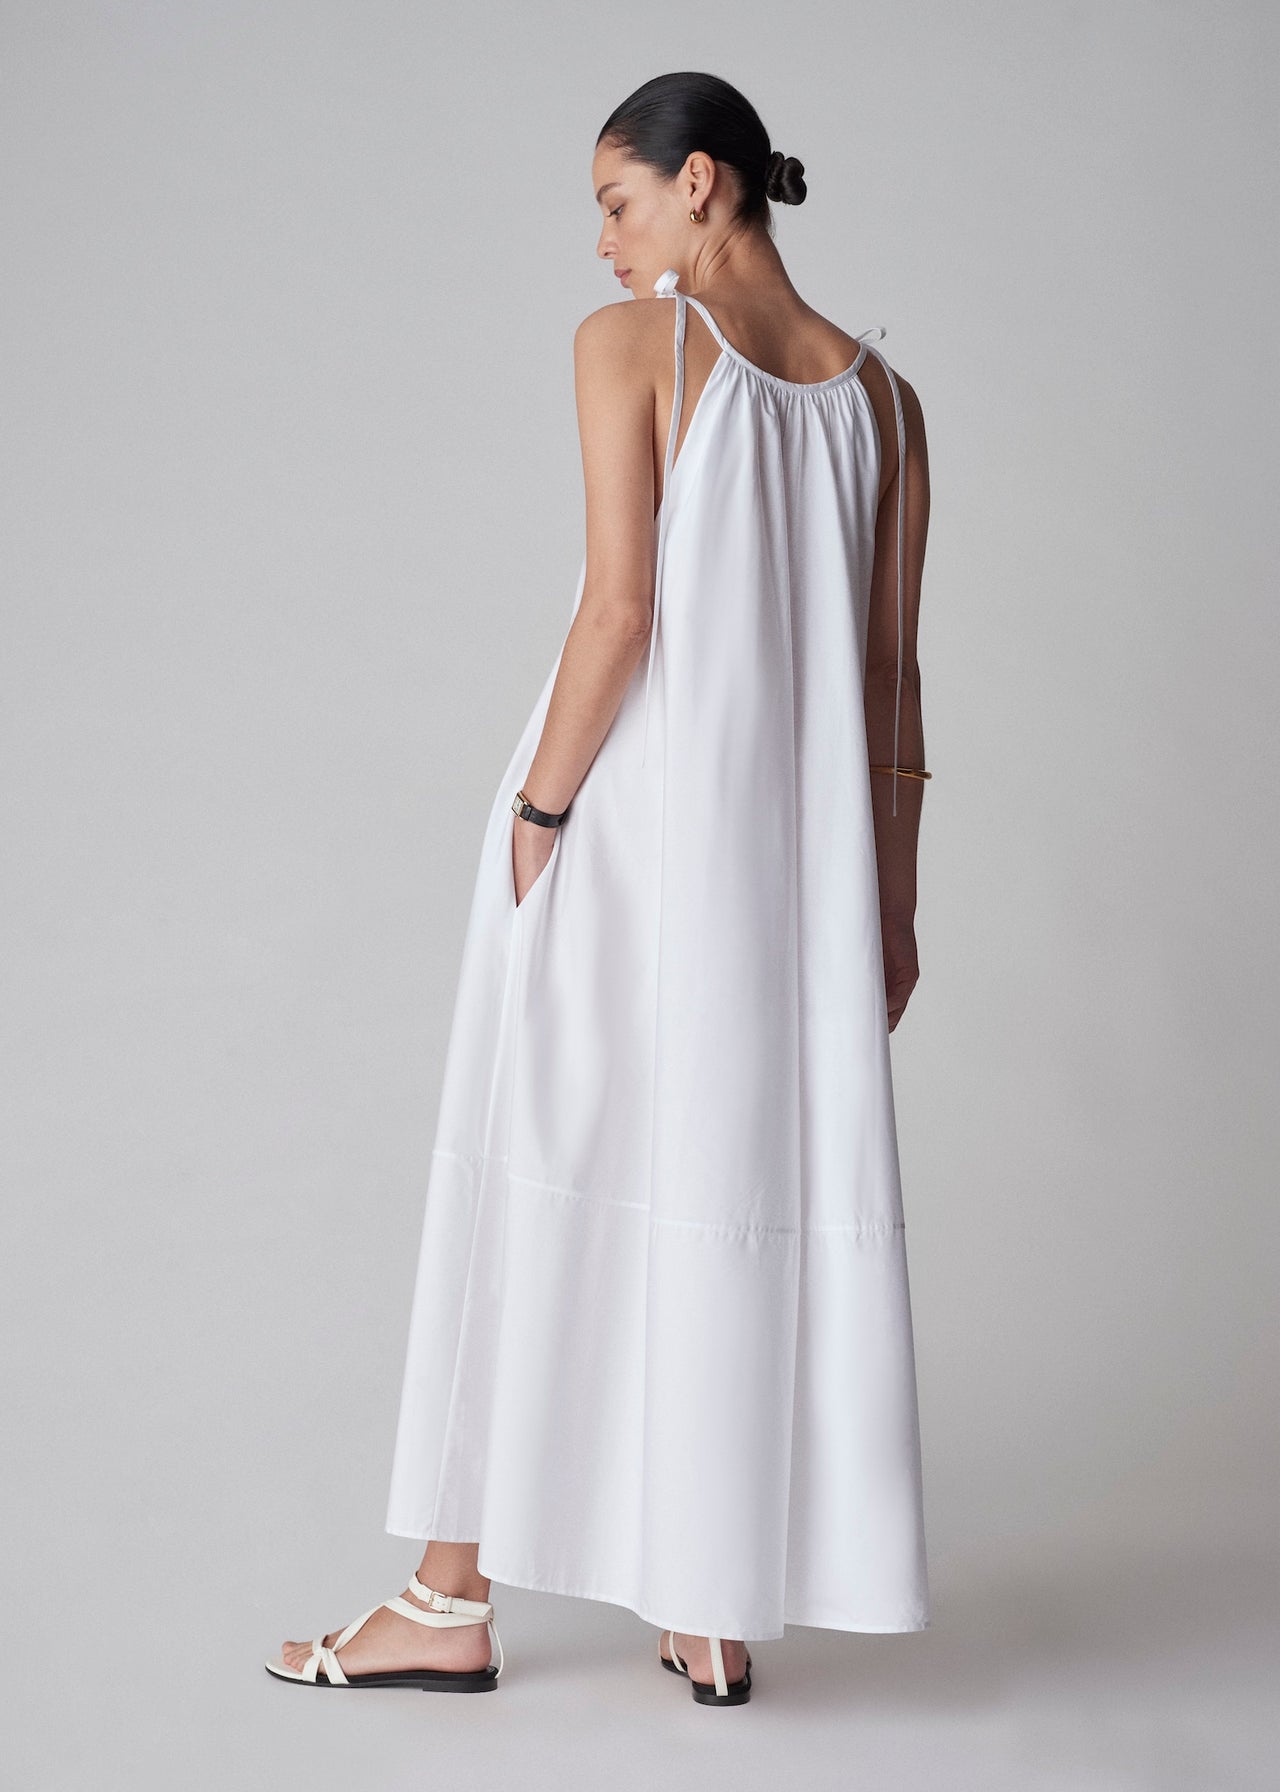 Gathered Halter Dress in Cotton Poplin - White - CO